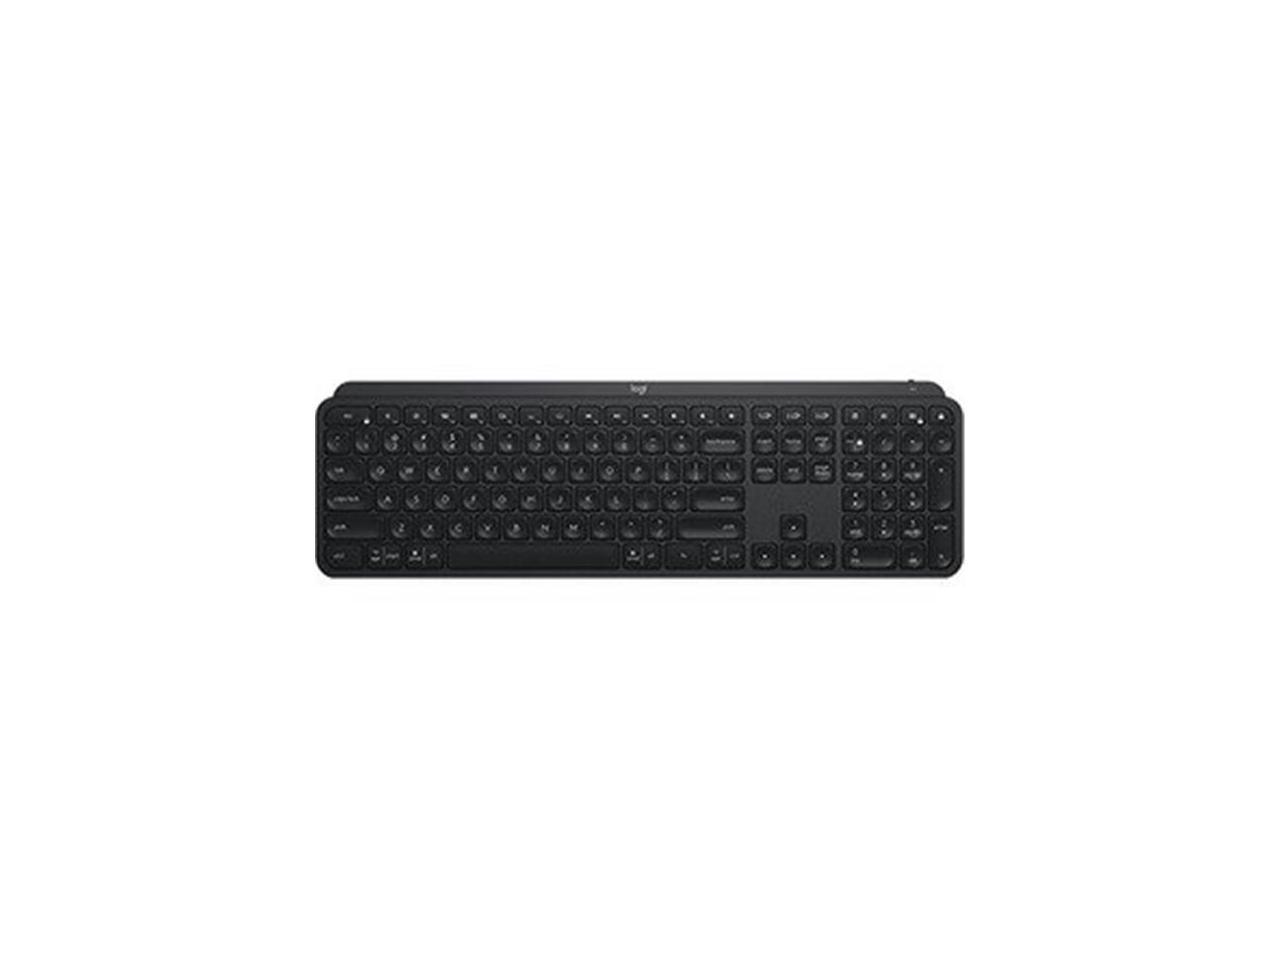 Logitech MX Keys Advanced Wireless Keyboard - Newegg.com